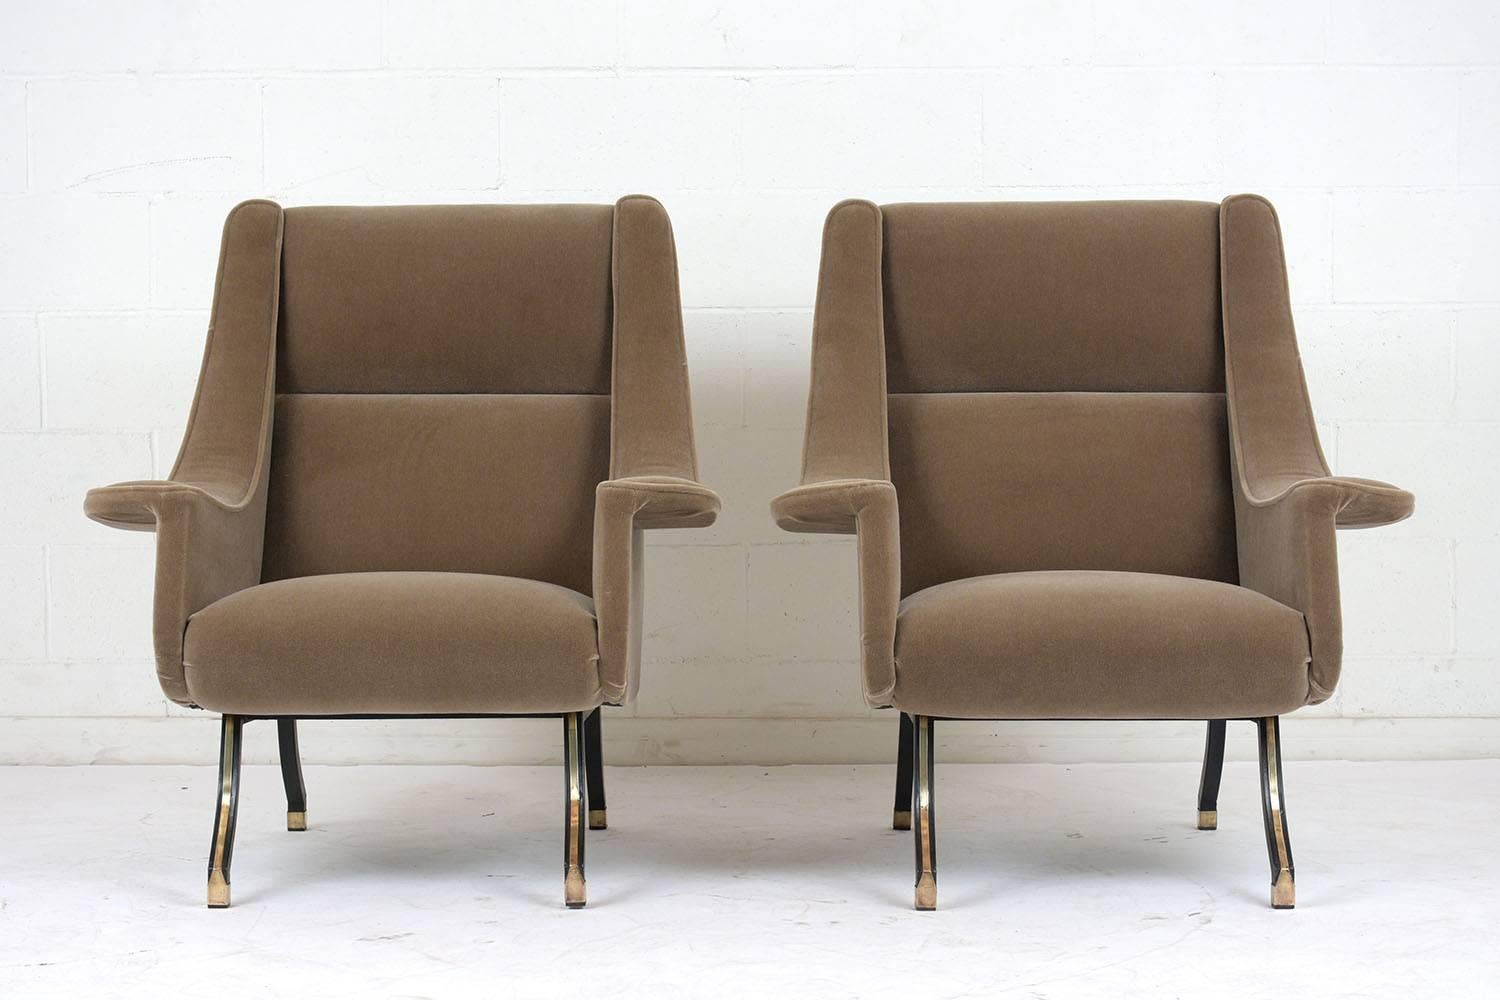 20th Century Italian Mid-Century Modern Lounge Chairs, Pair